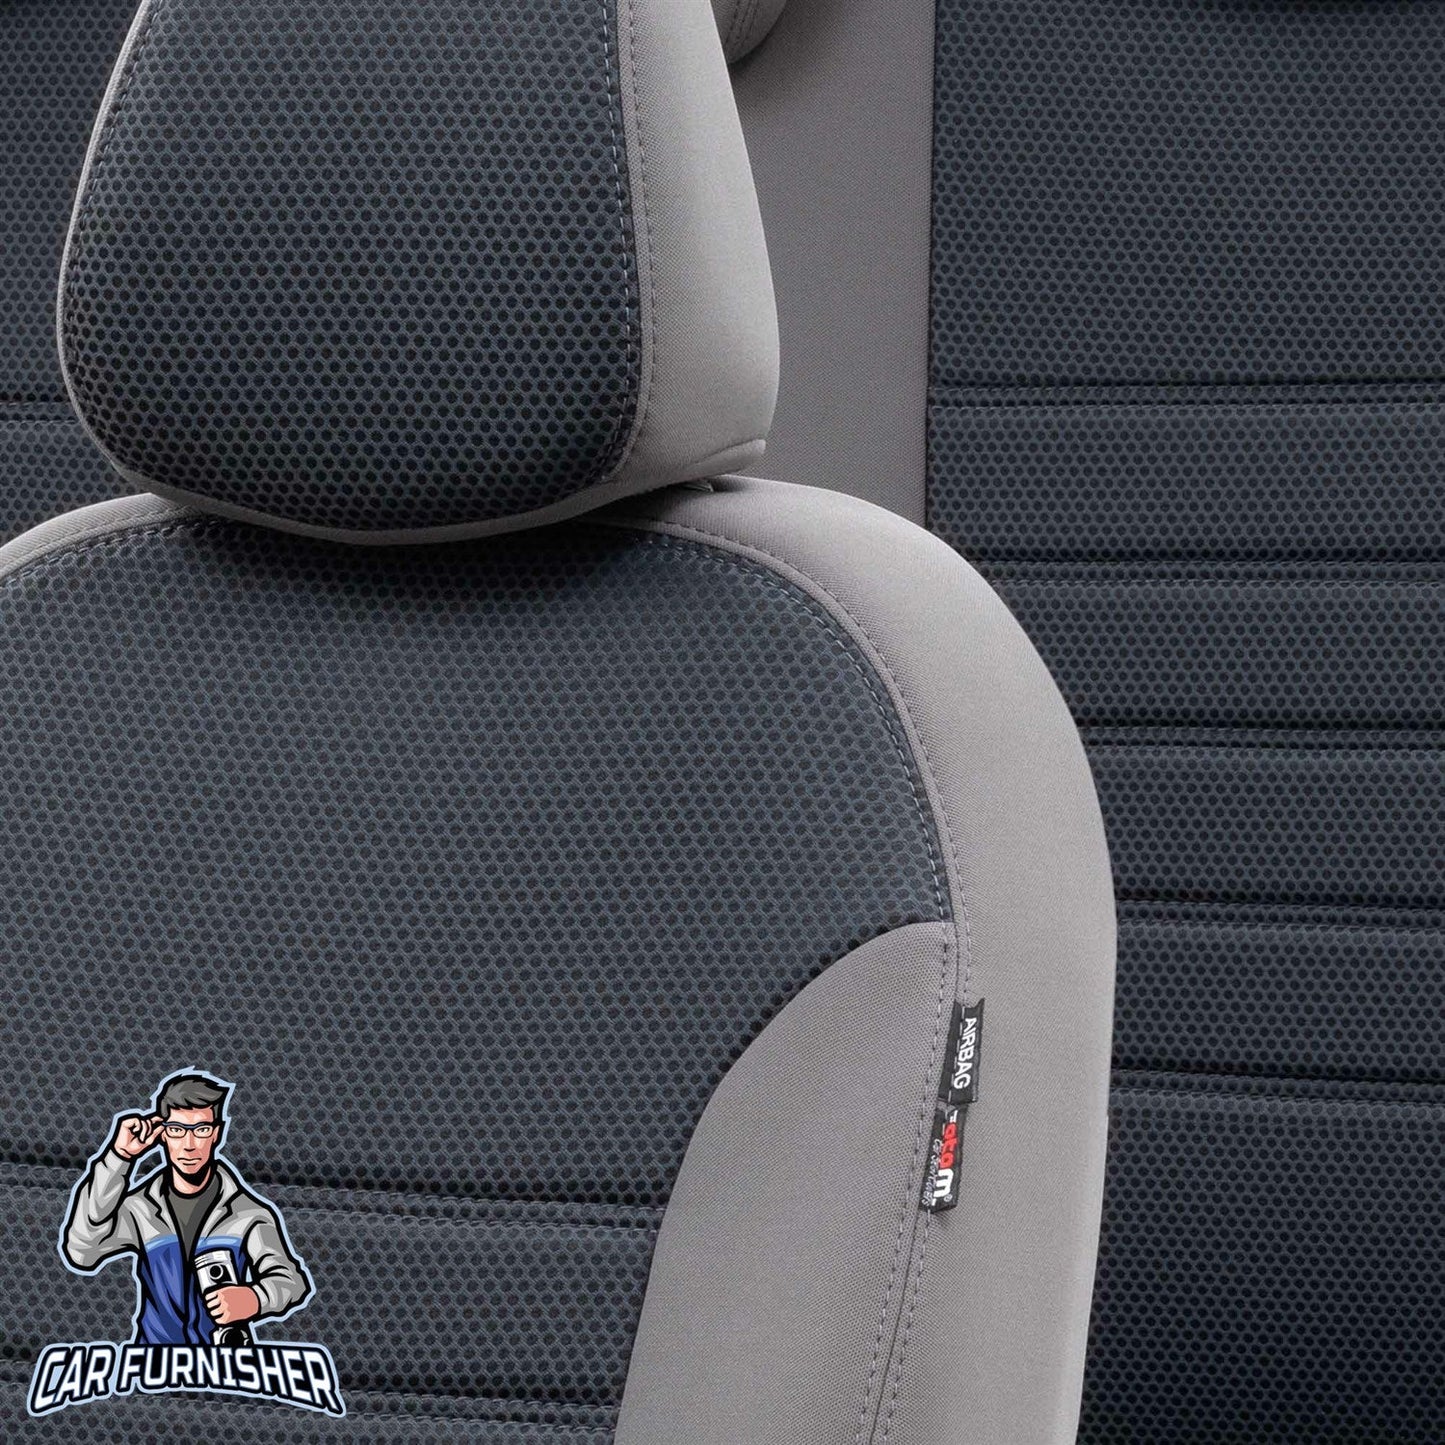 Volkswagen Jetta Seat Cover Original Jacquard Design Smoked Jacquard Fabric